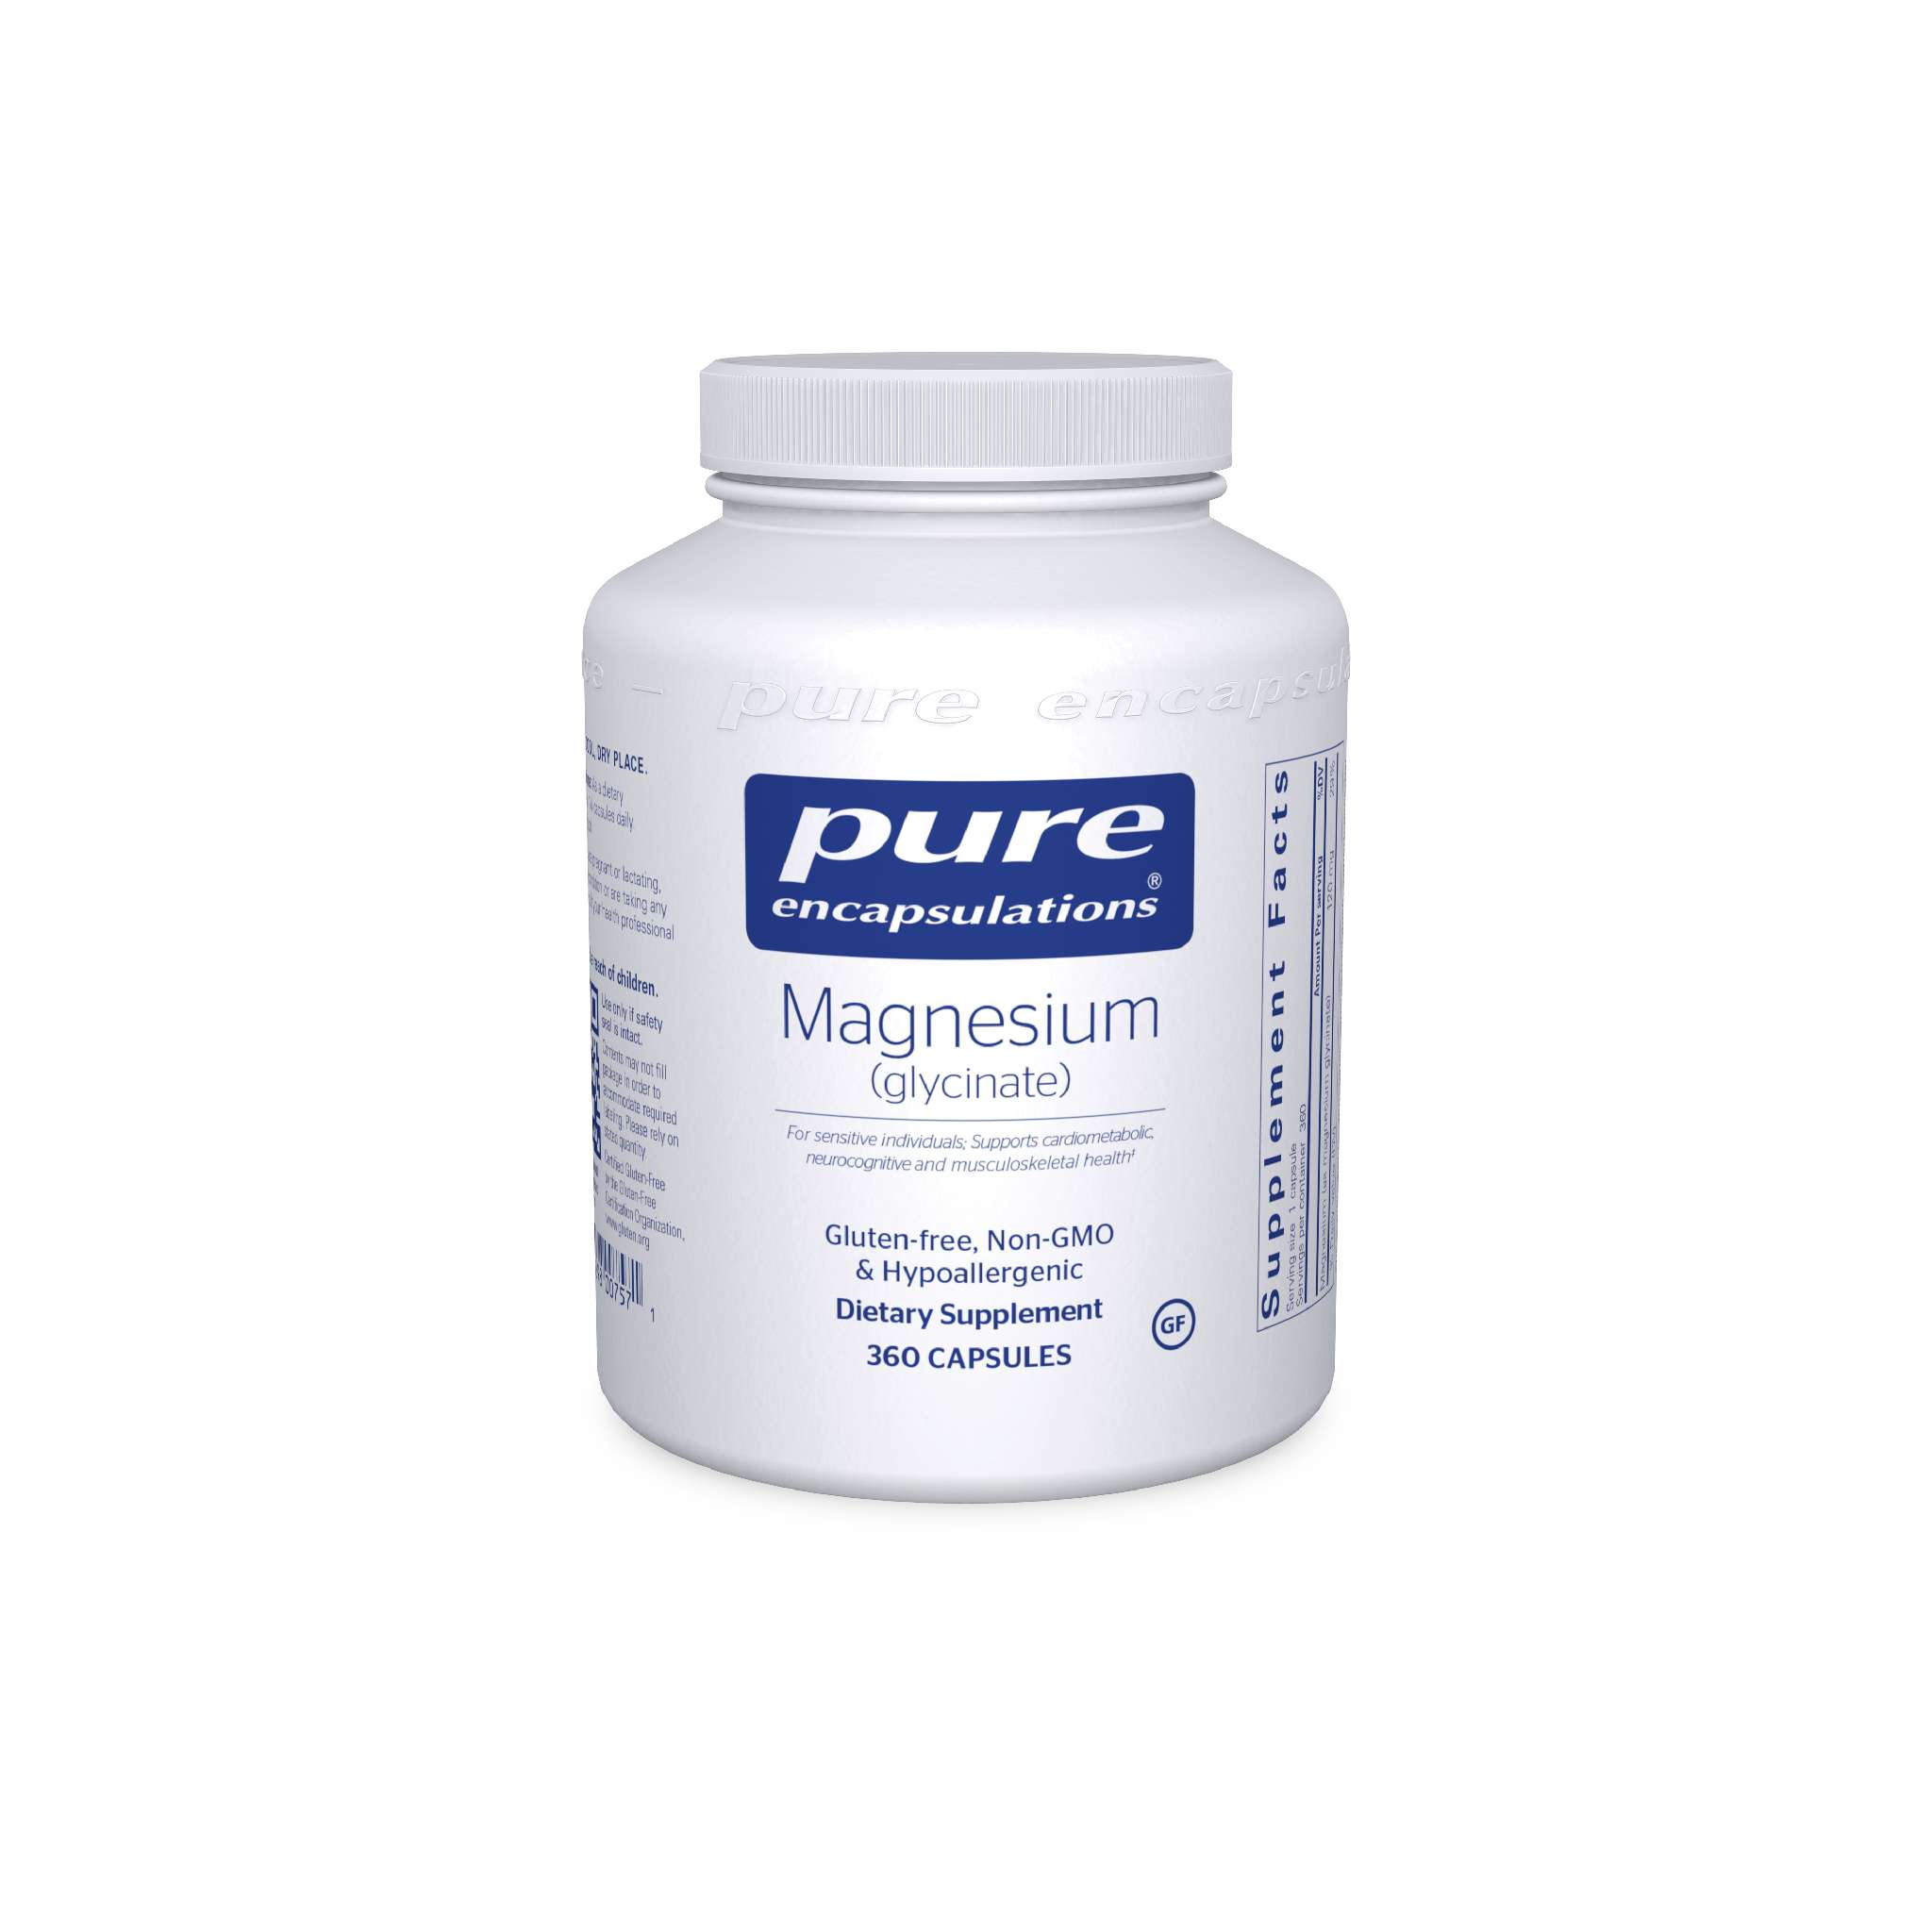 Pure Encapsulations - Magnesium Glycinate 120 mg